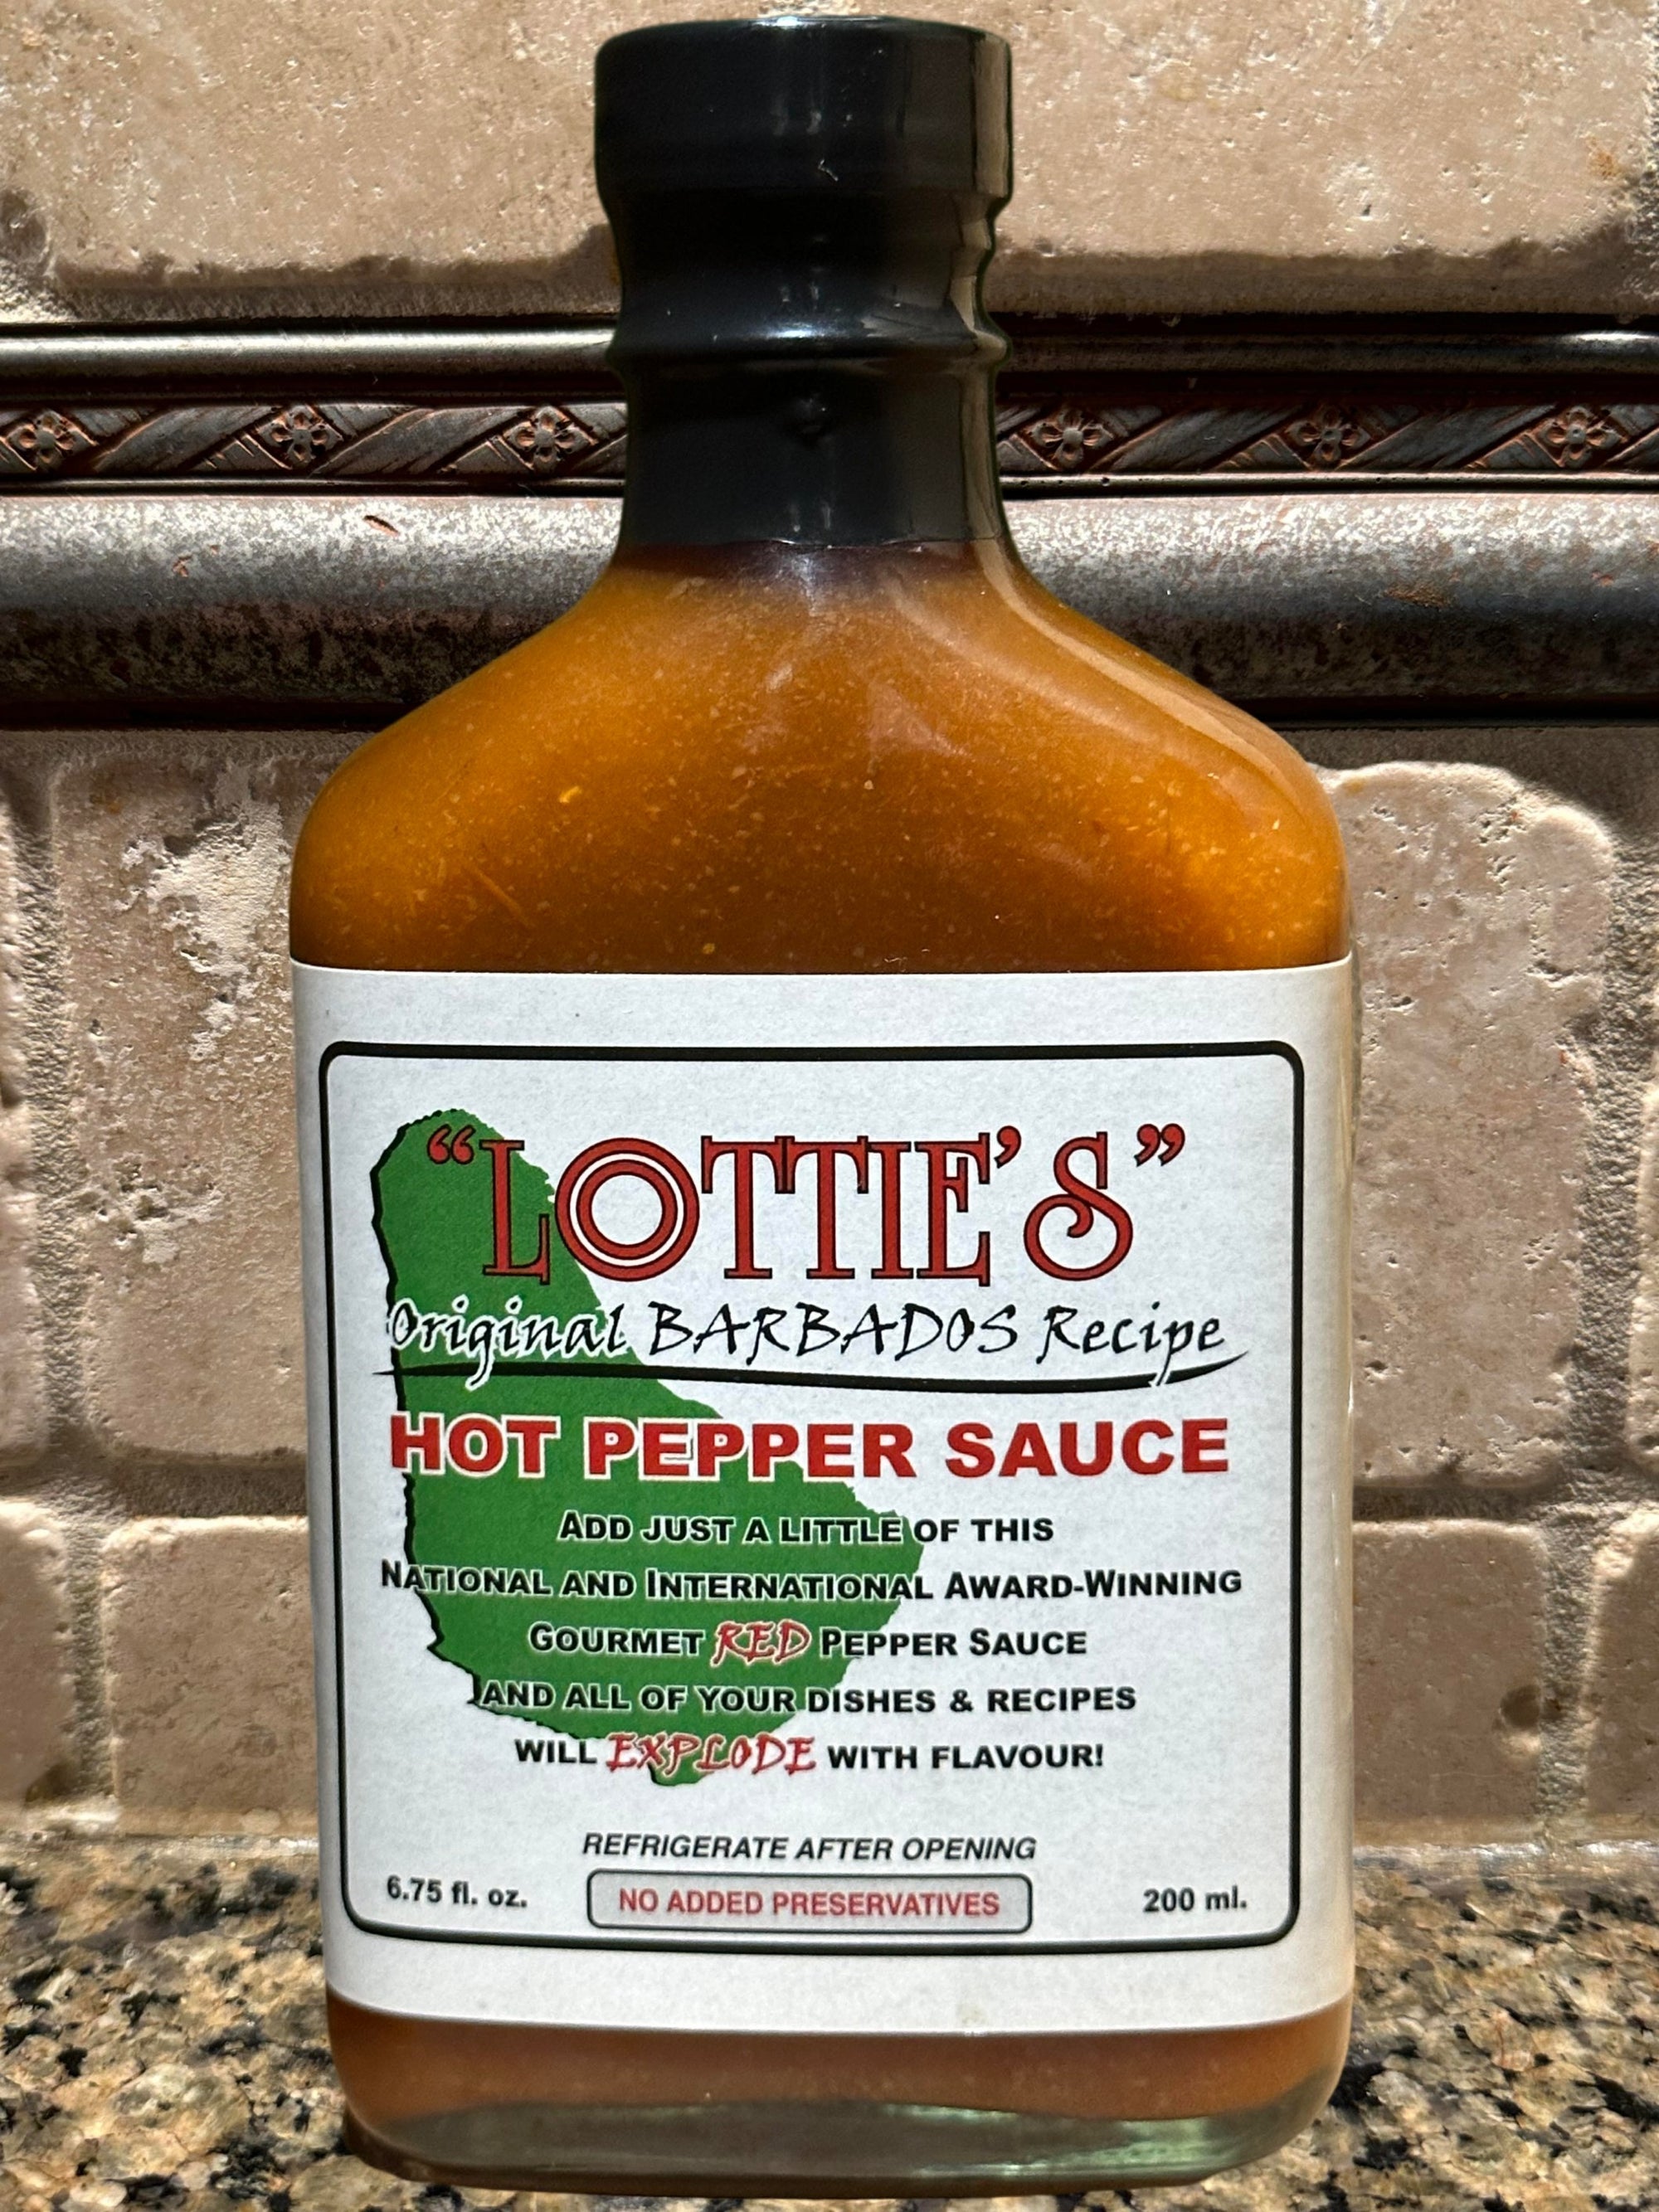 Lottie's Original Barbados Hot Pepper Sauce